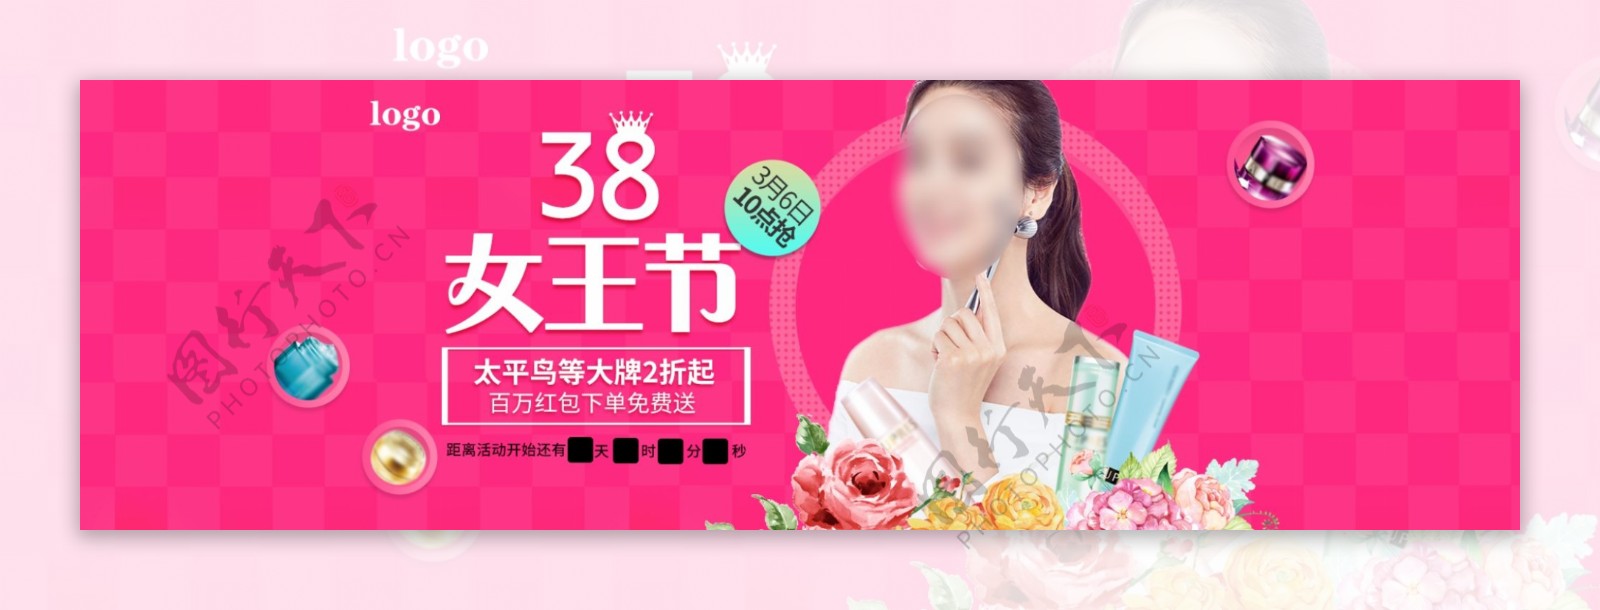 38女生节护肤商品促销活动banner